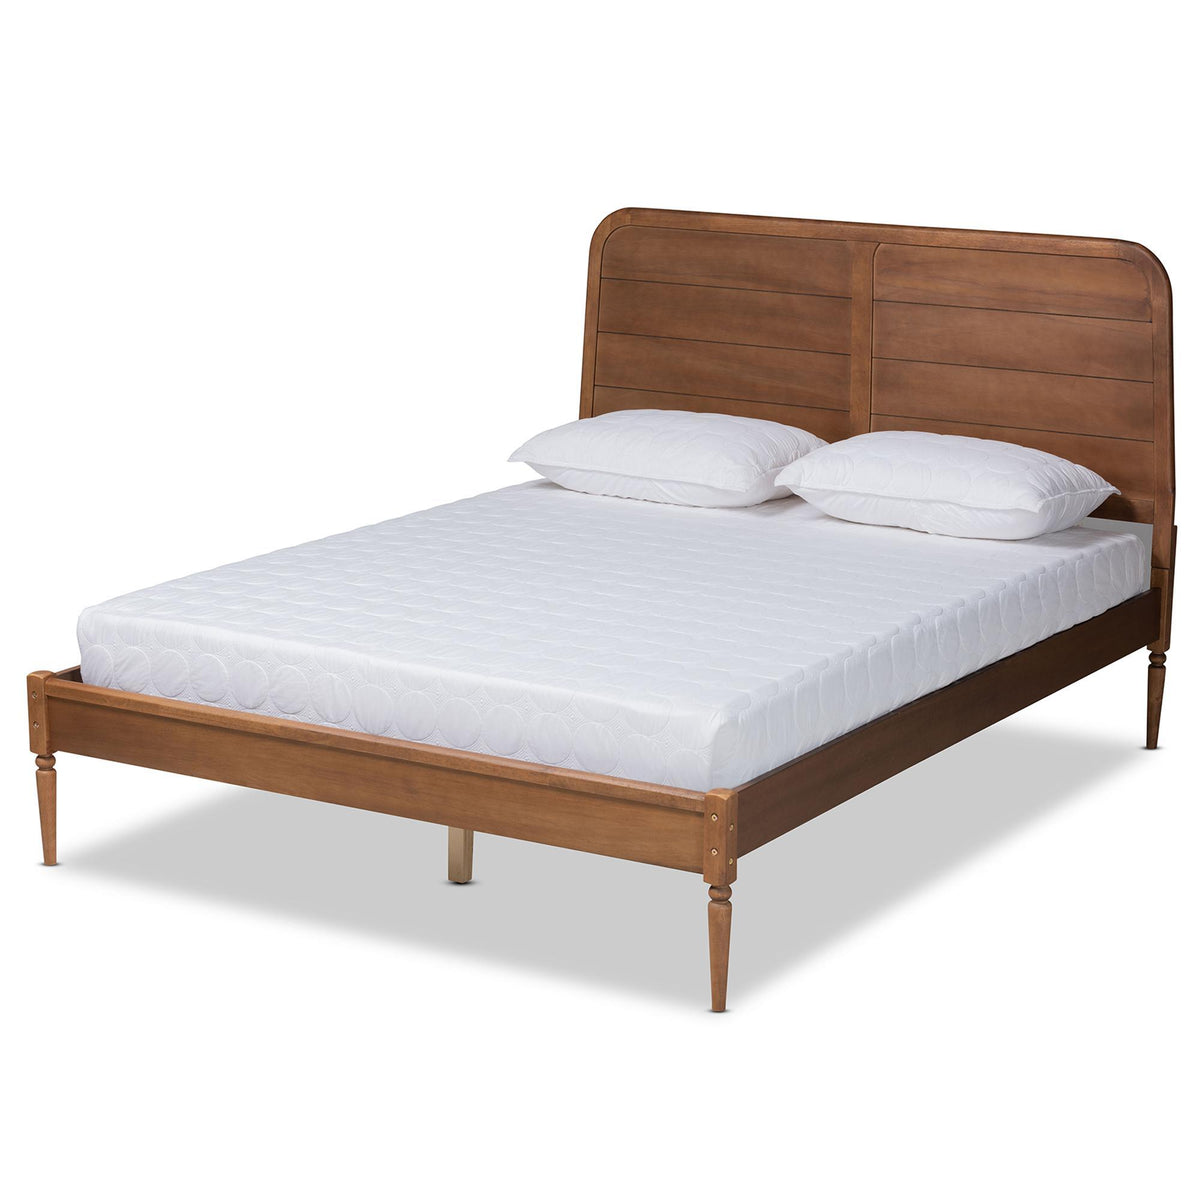 Baxton Studio Kassidy Classic And Traditional Walnut Brown Finished Wood Full Size Platform Bed - MG0063-Walnut-Full